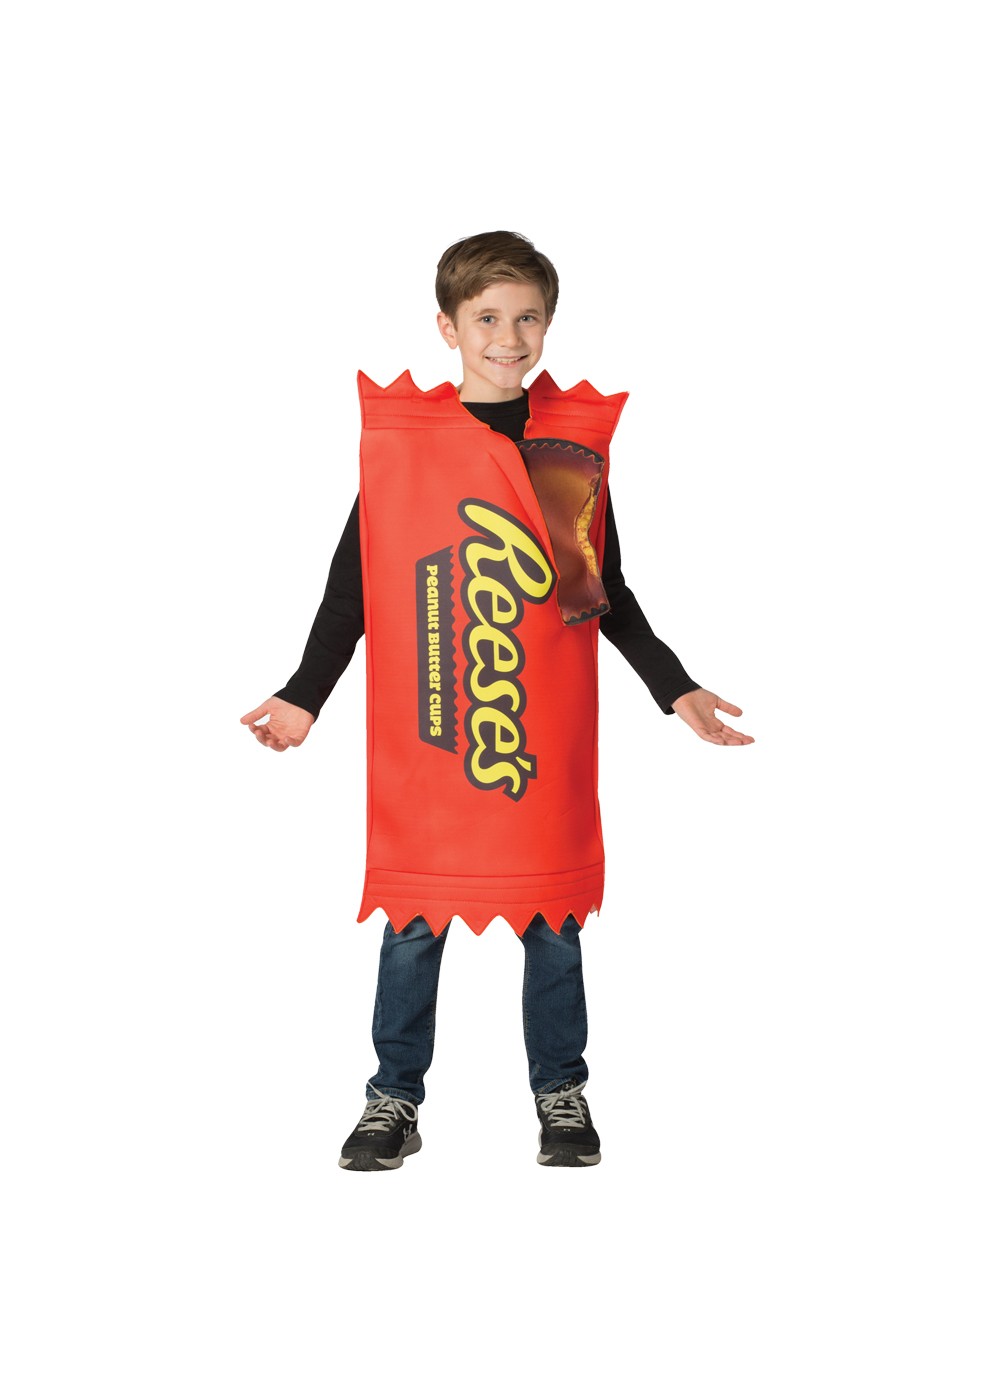 Hersheys Reeses Kids Costume